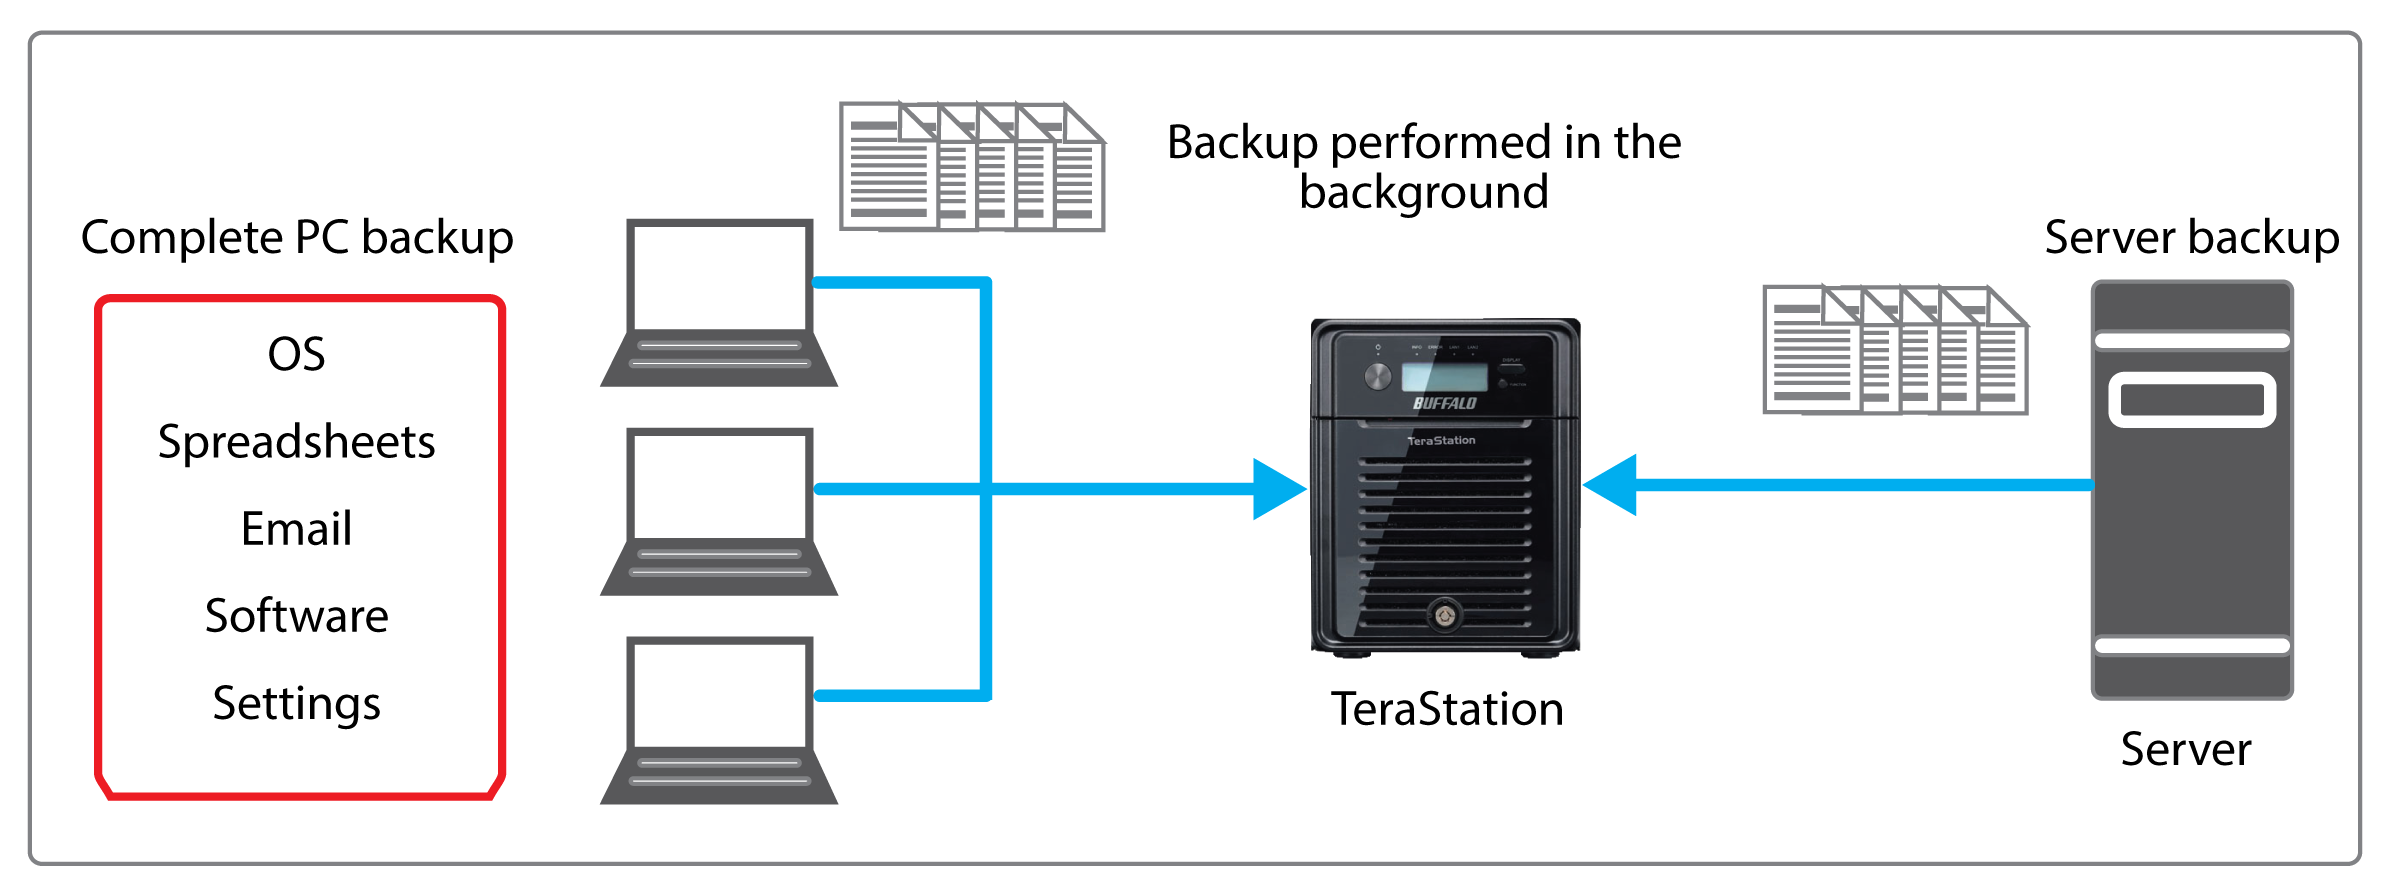 terastation 3000 data protection and backup